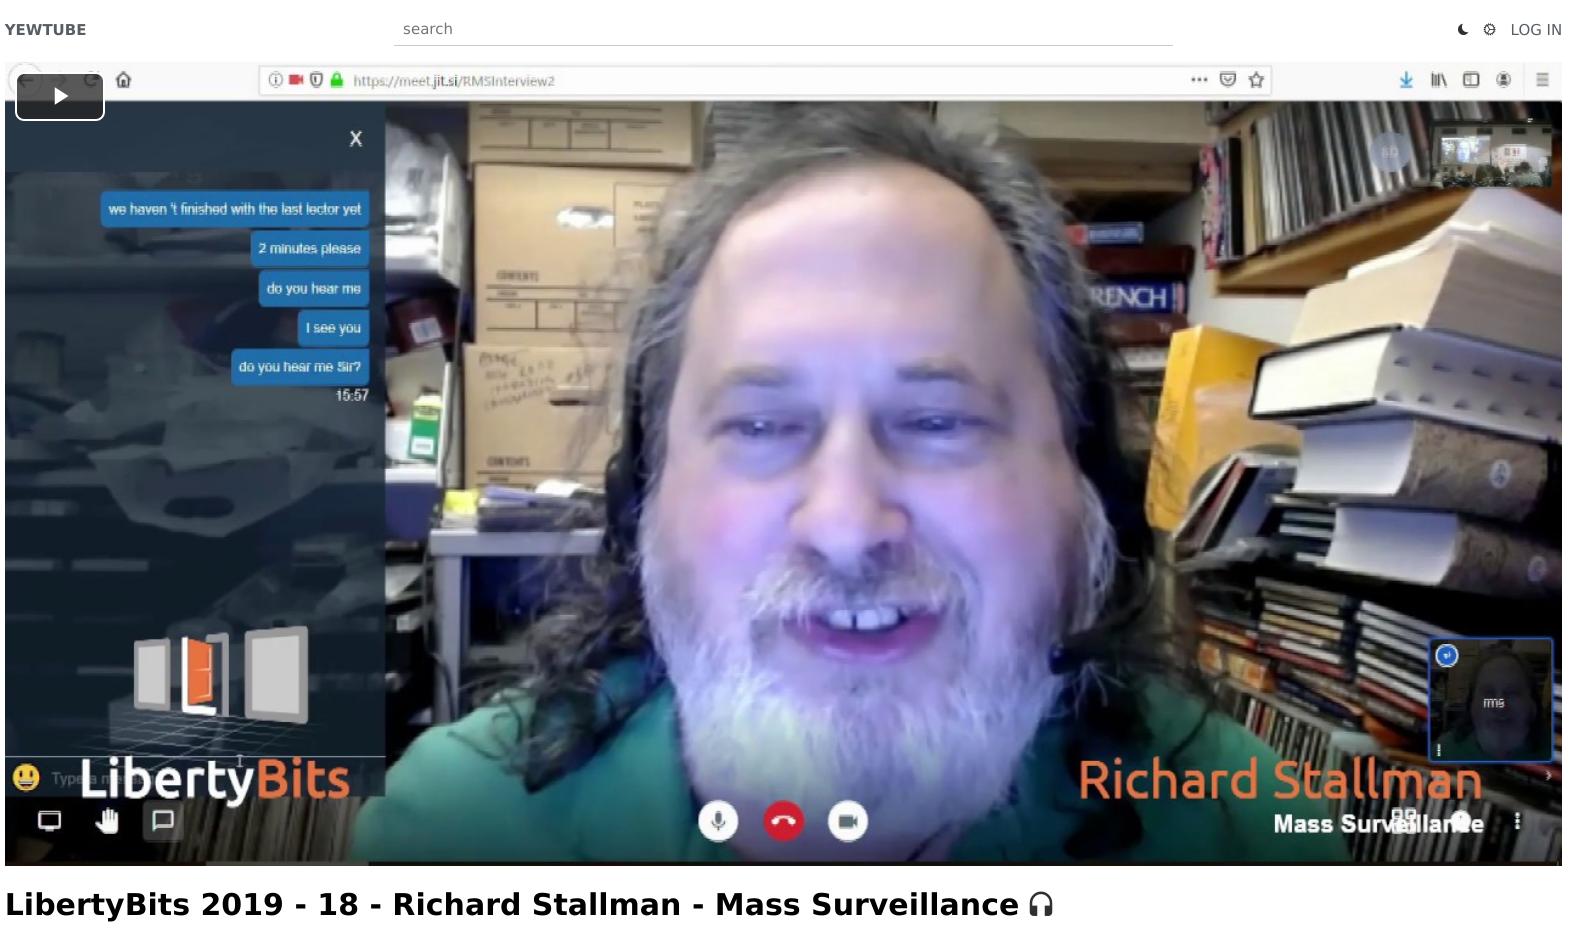 LibertyBits 2019 - 18 - Richard Stallman - Mass Surveillance